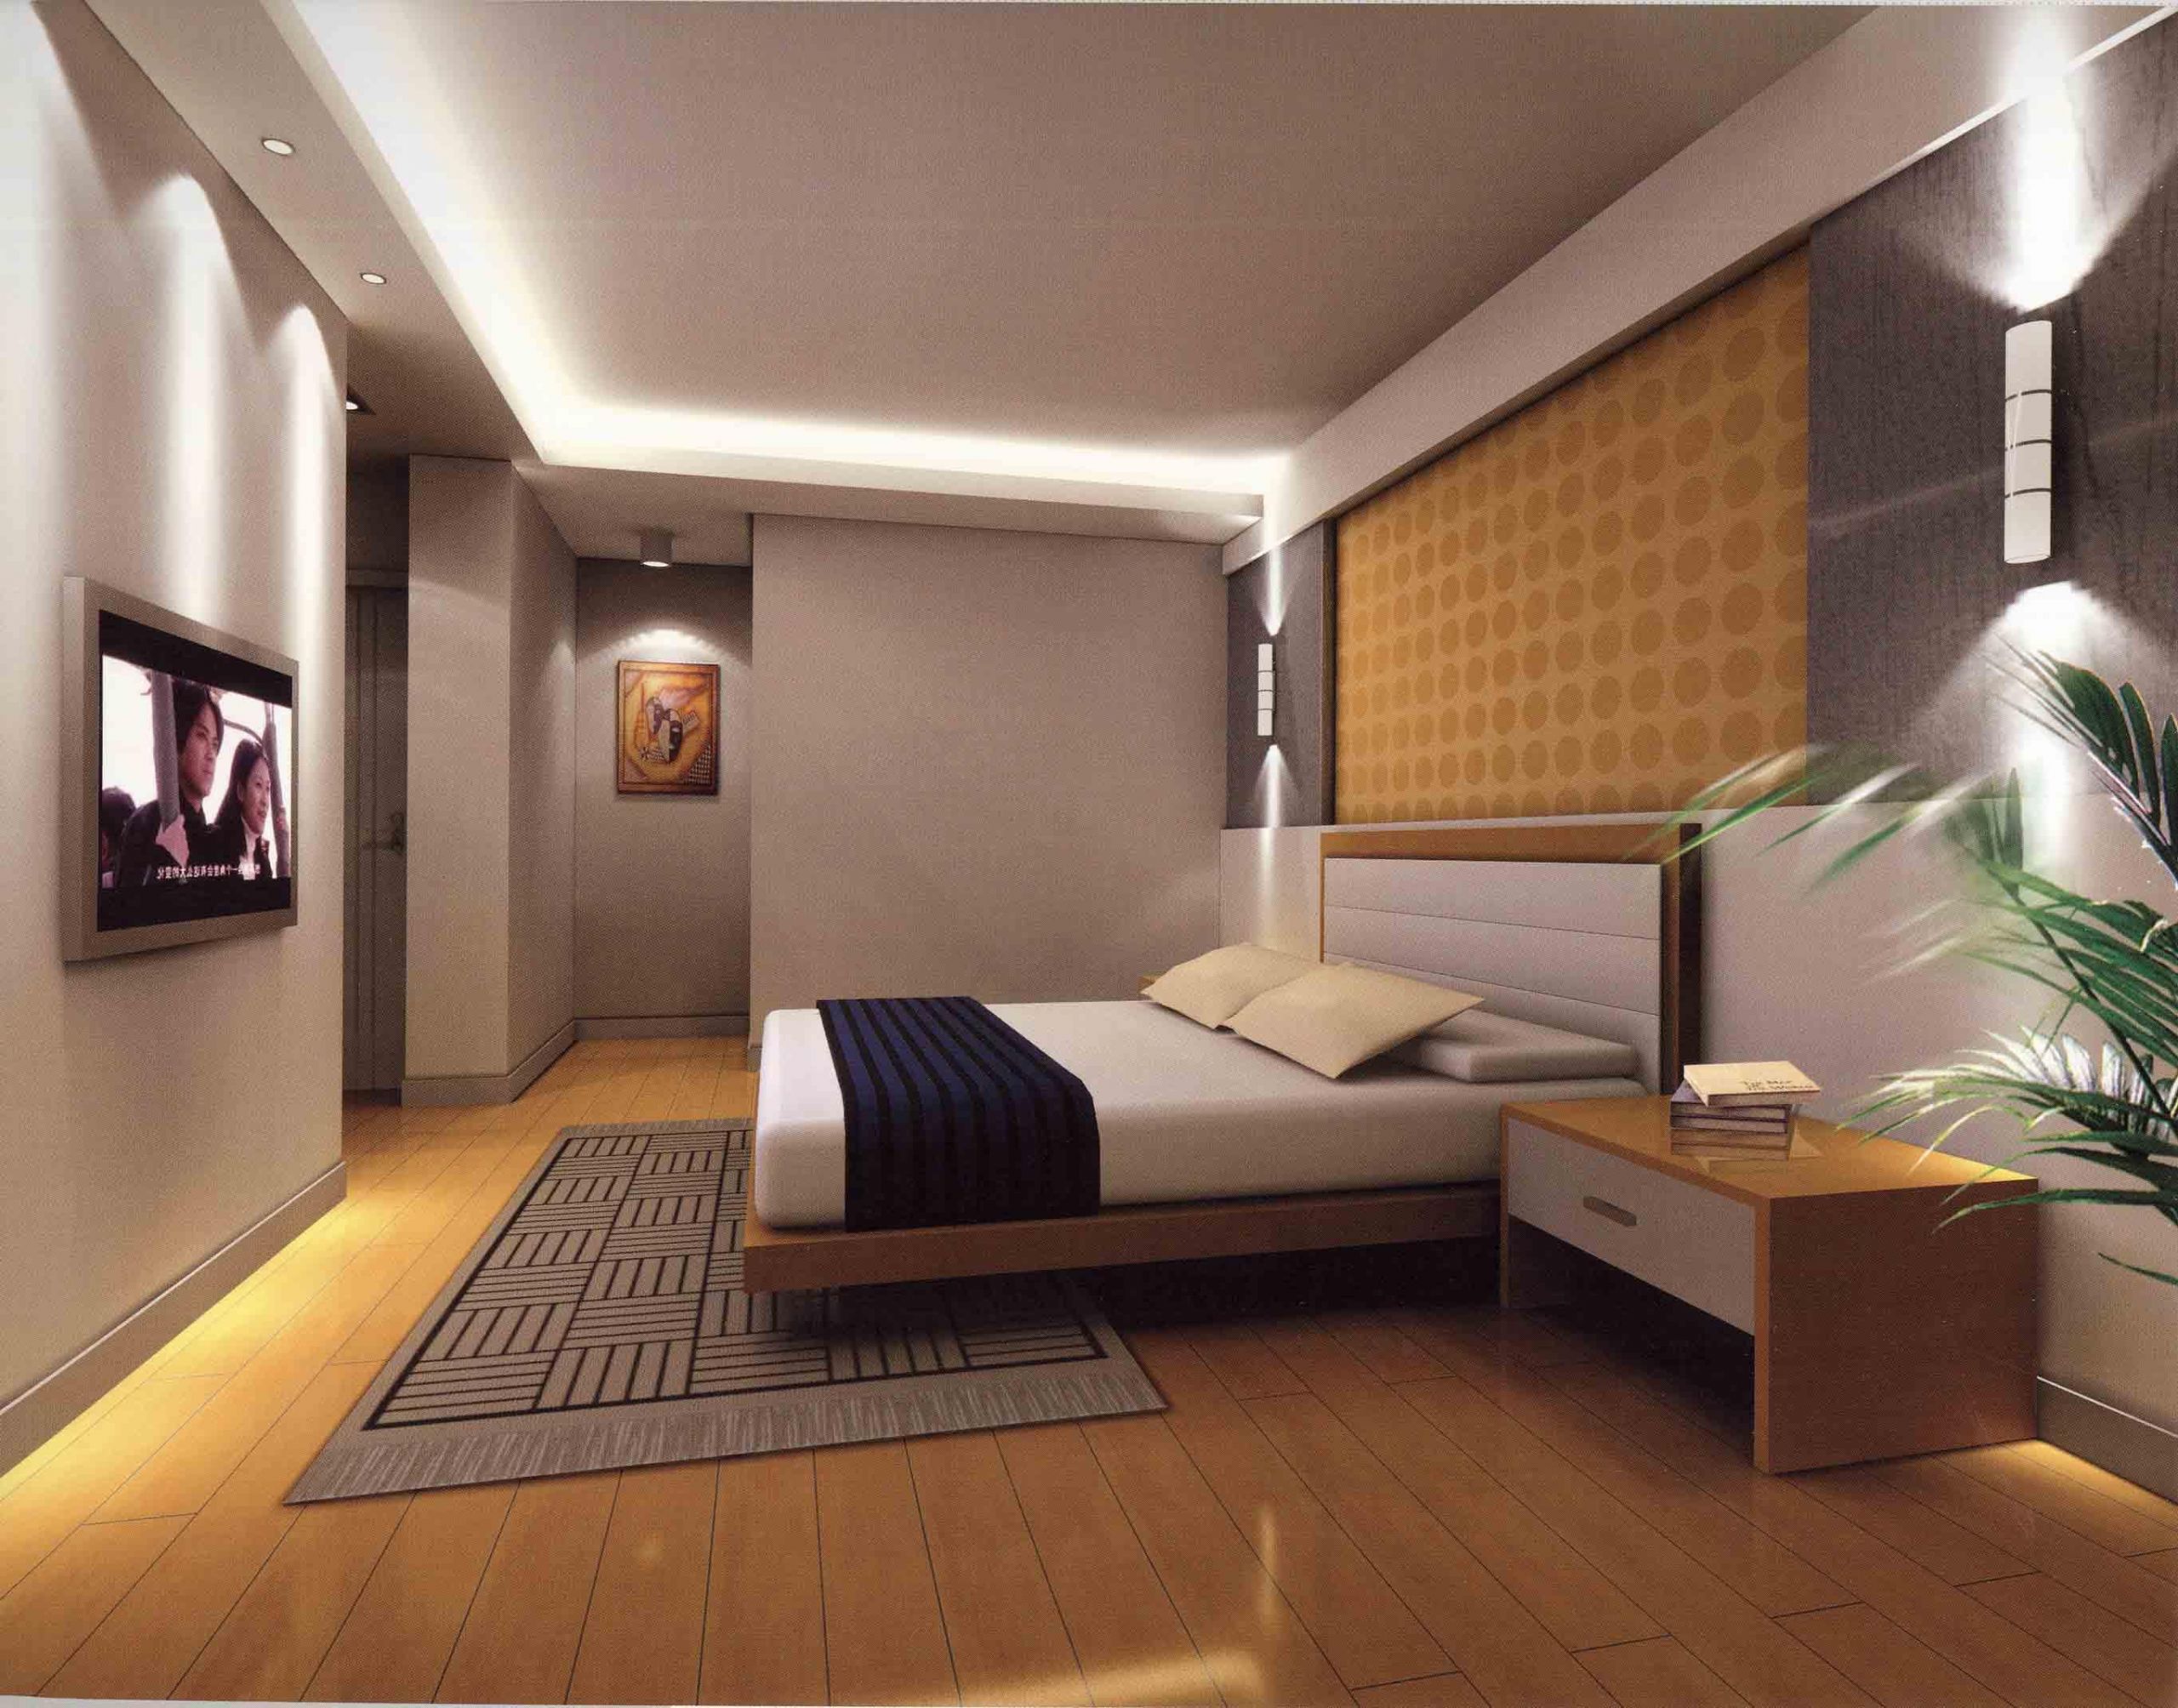 Master Bedroom Art
 Bedroom Design Gallery For Inspiration